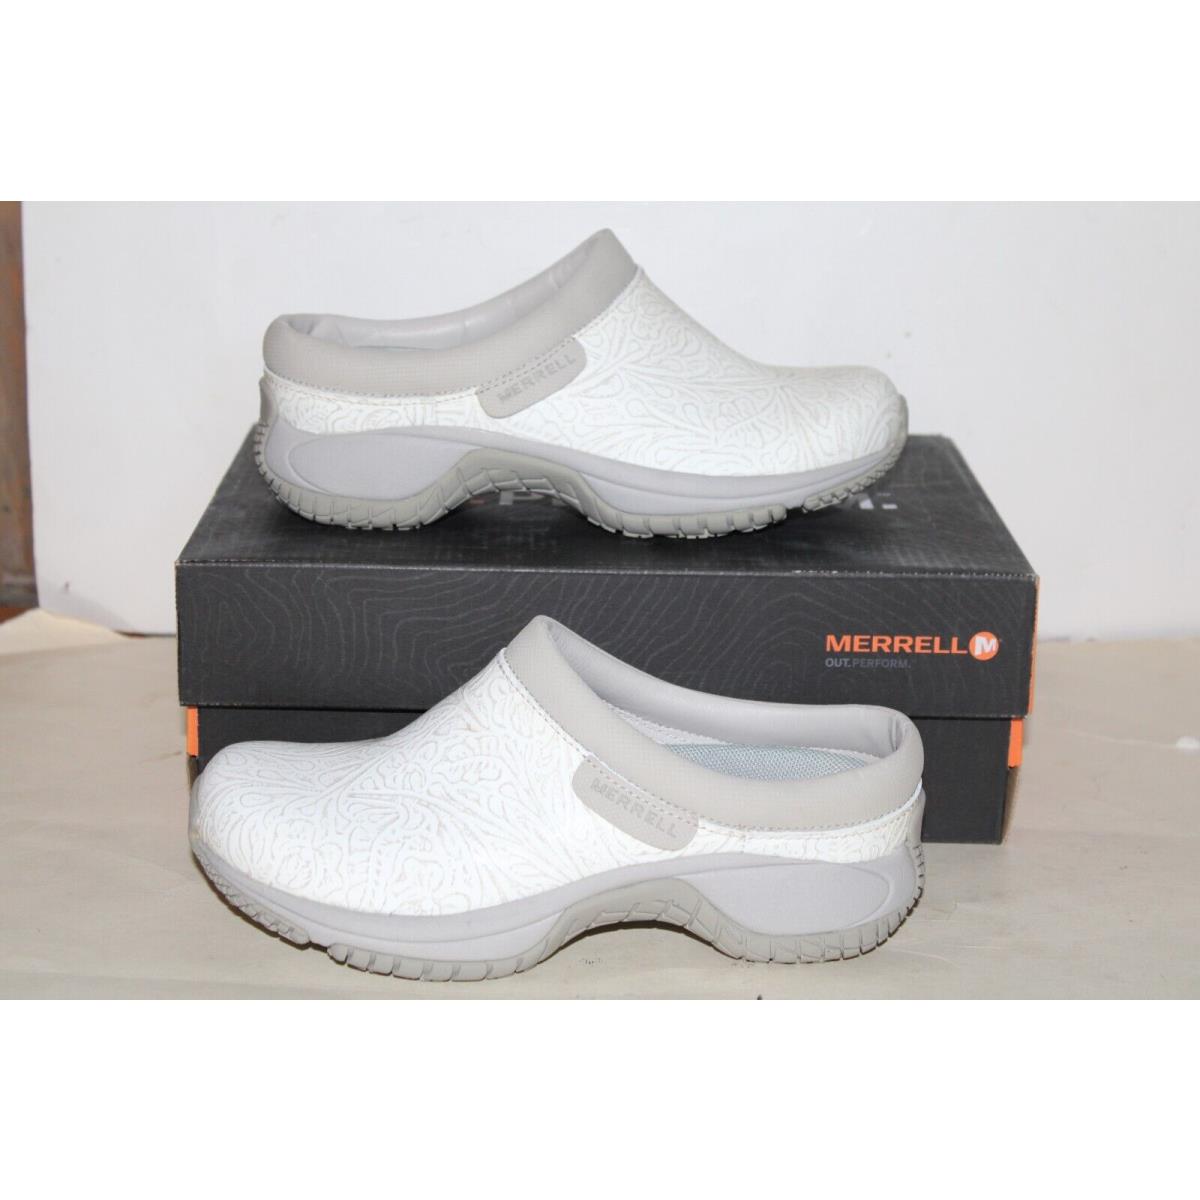 Merrell Encore Slide Pro Lab White Slip-on Clogs Mules Shoes US 5/EU 35